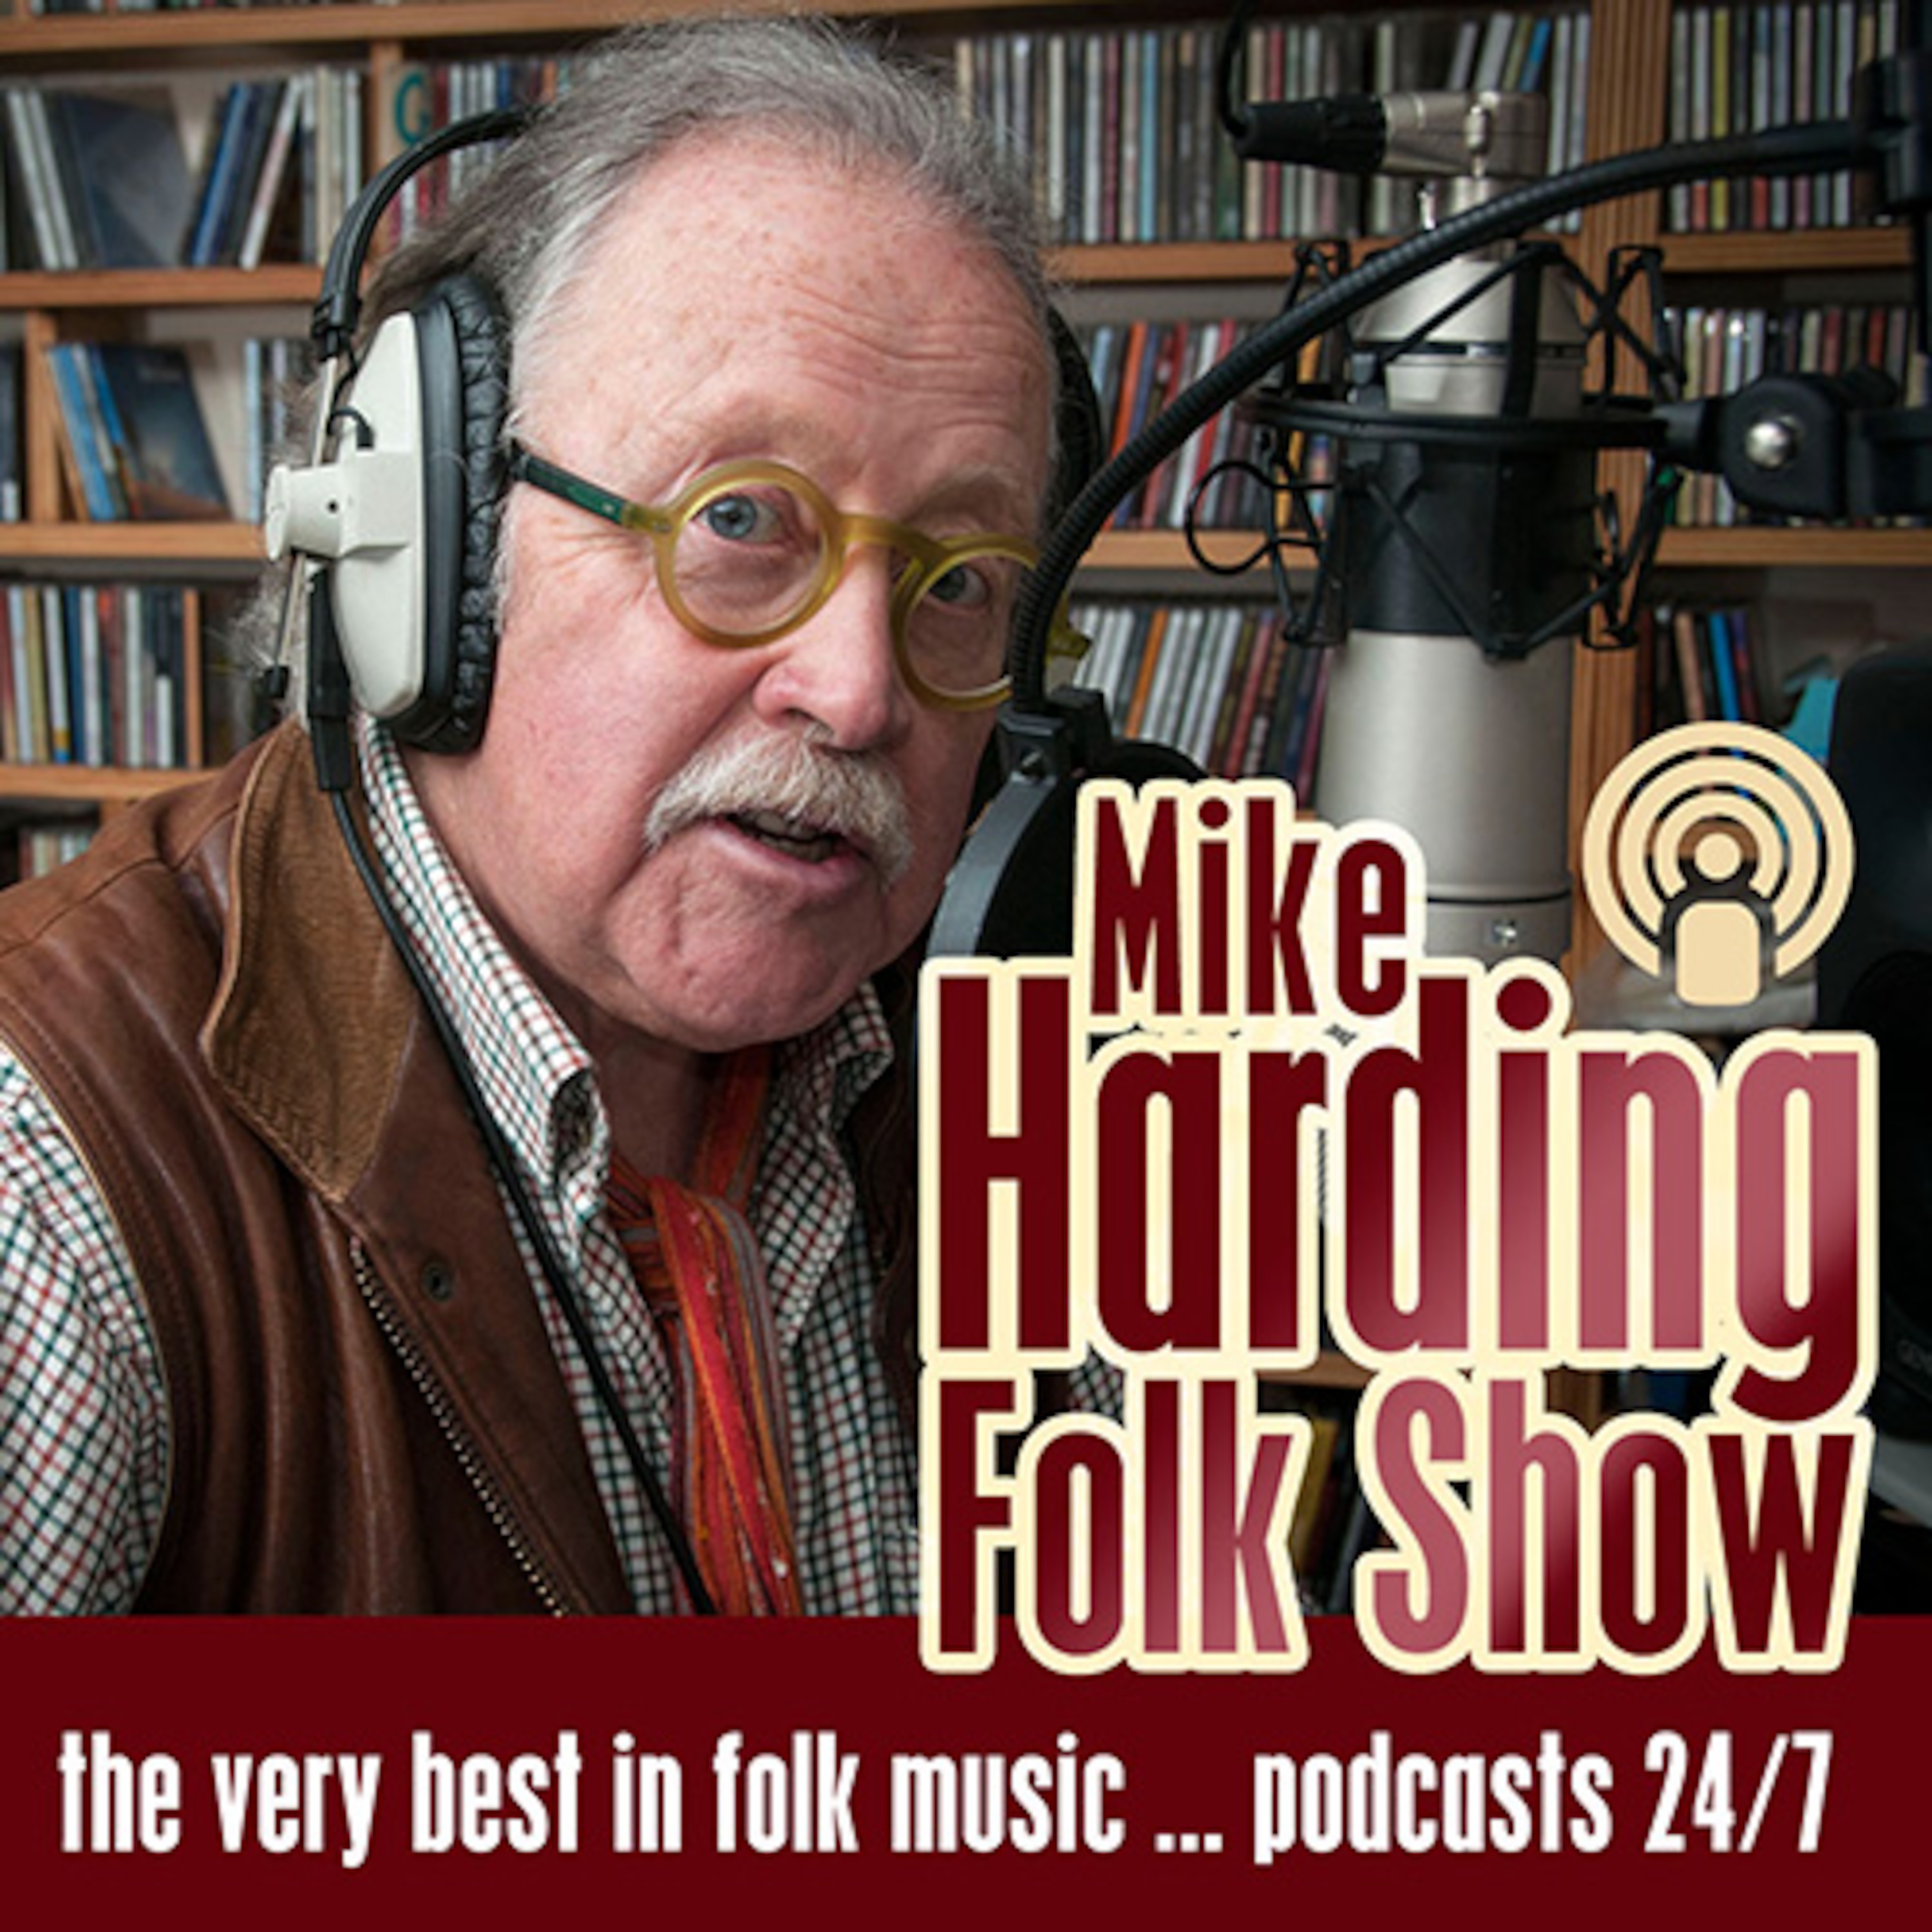 Mike Harding Folk Show 255